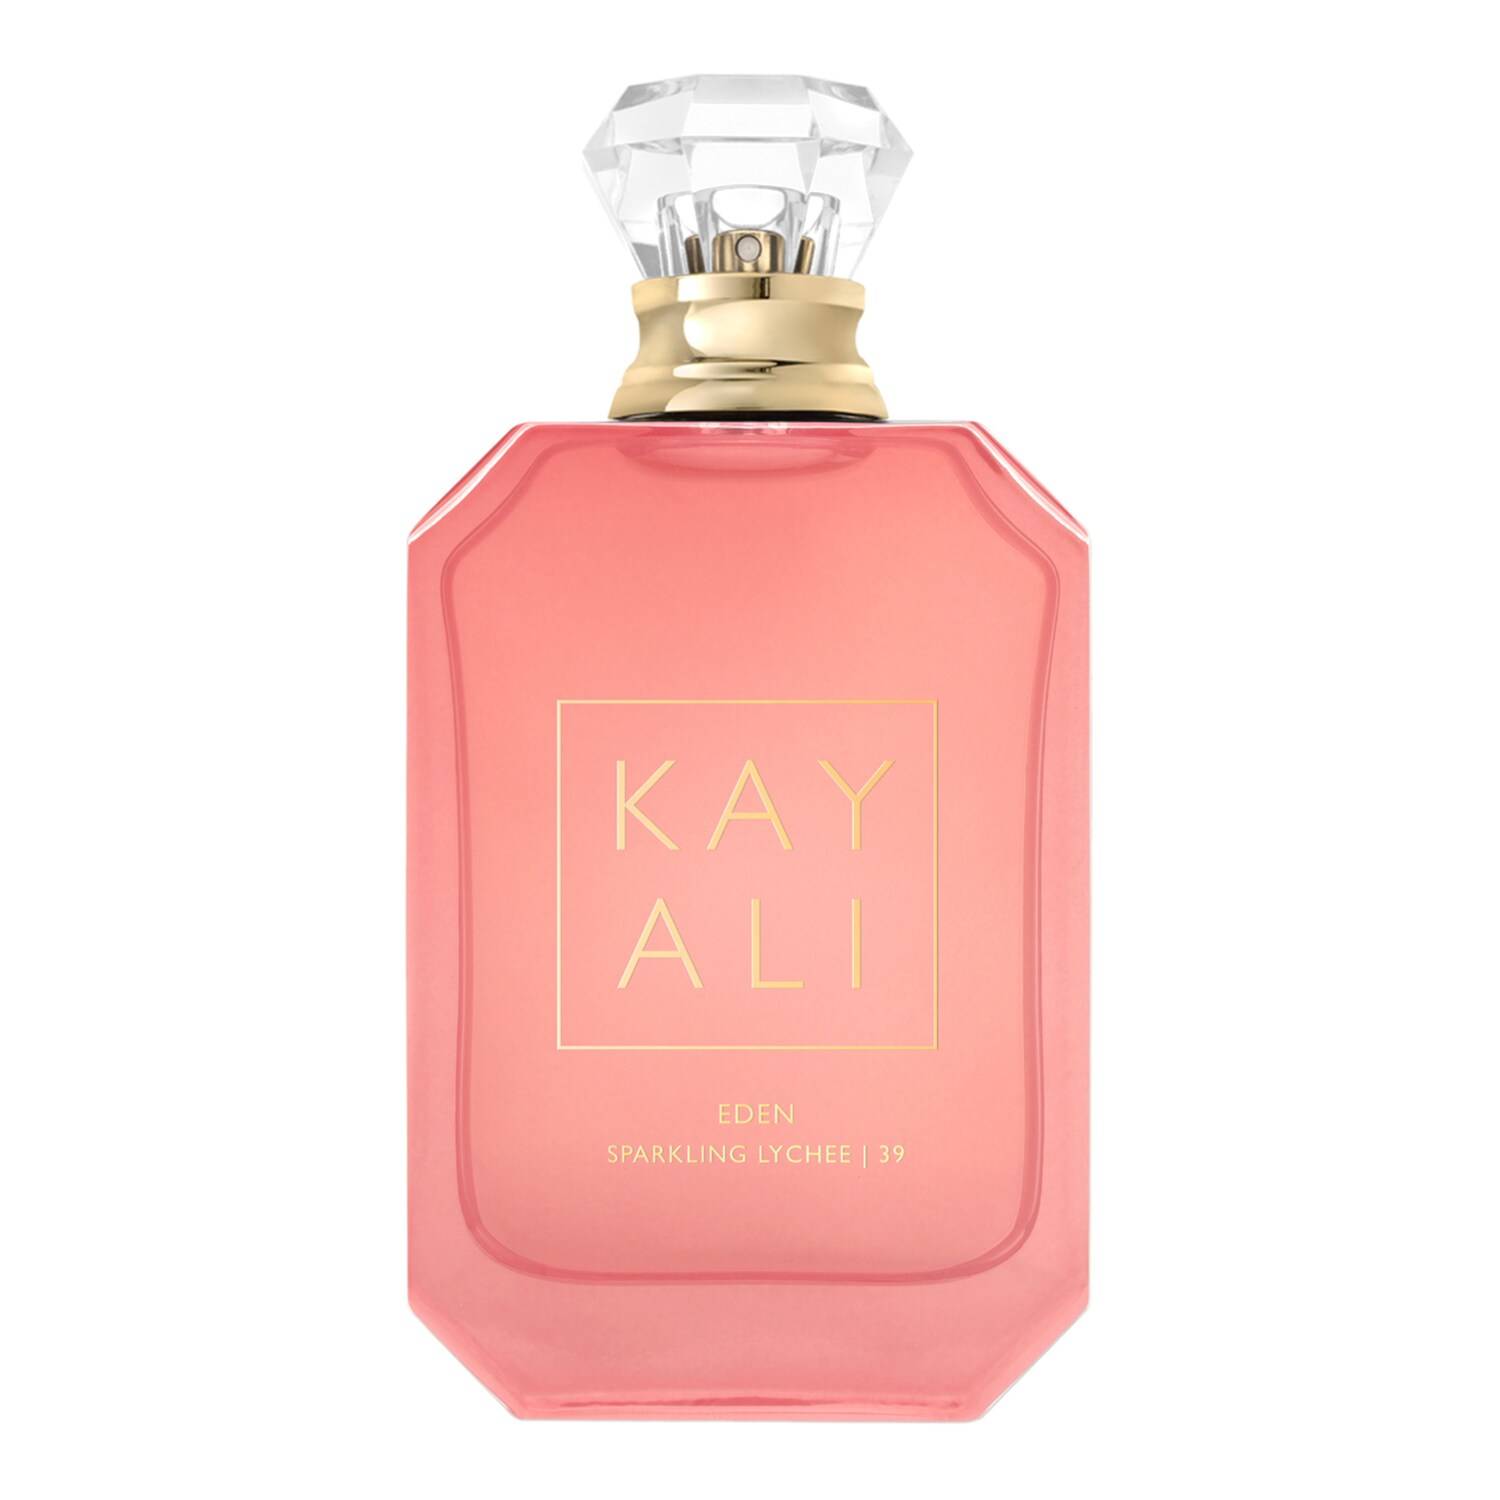 Kayali Eden Sparkling Lychee - 39 Eau De Parfum 50Ml